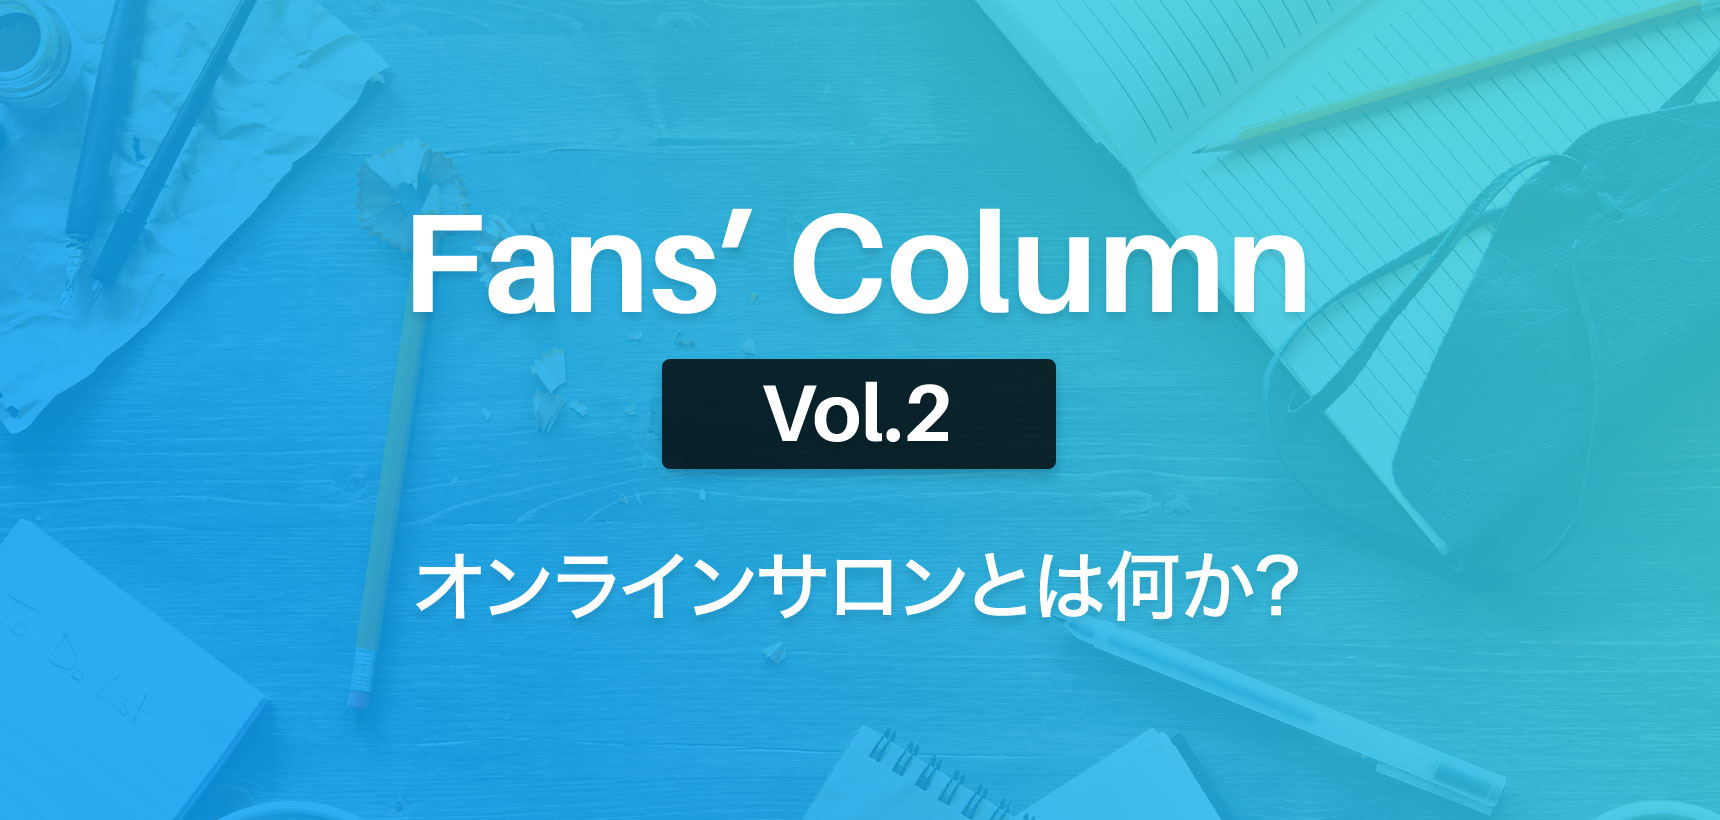 Fans’ Column | ファンズコラム Vol.2 オンラインサロンとは何か?